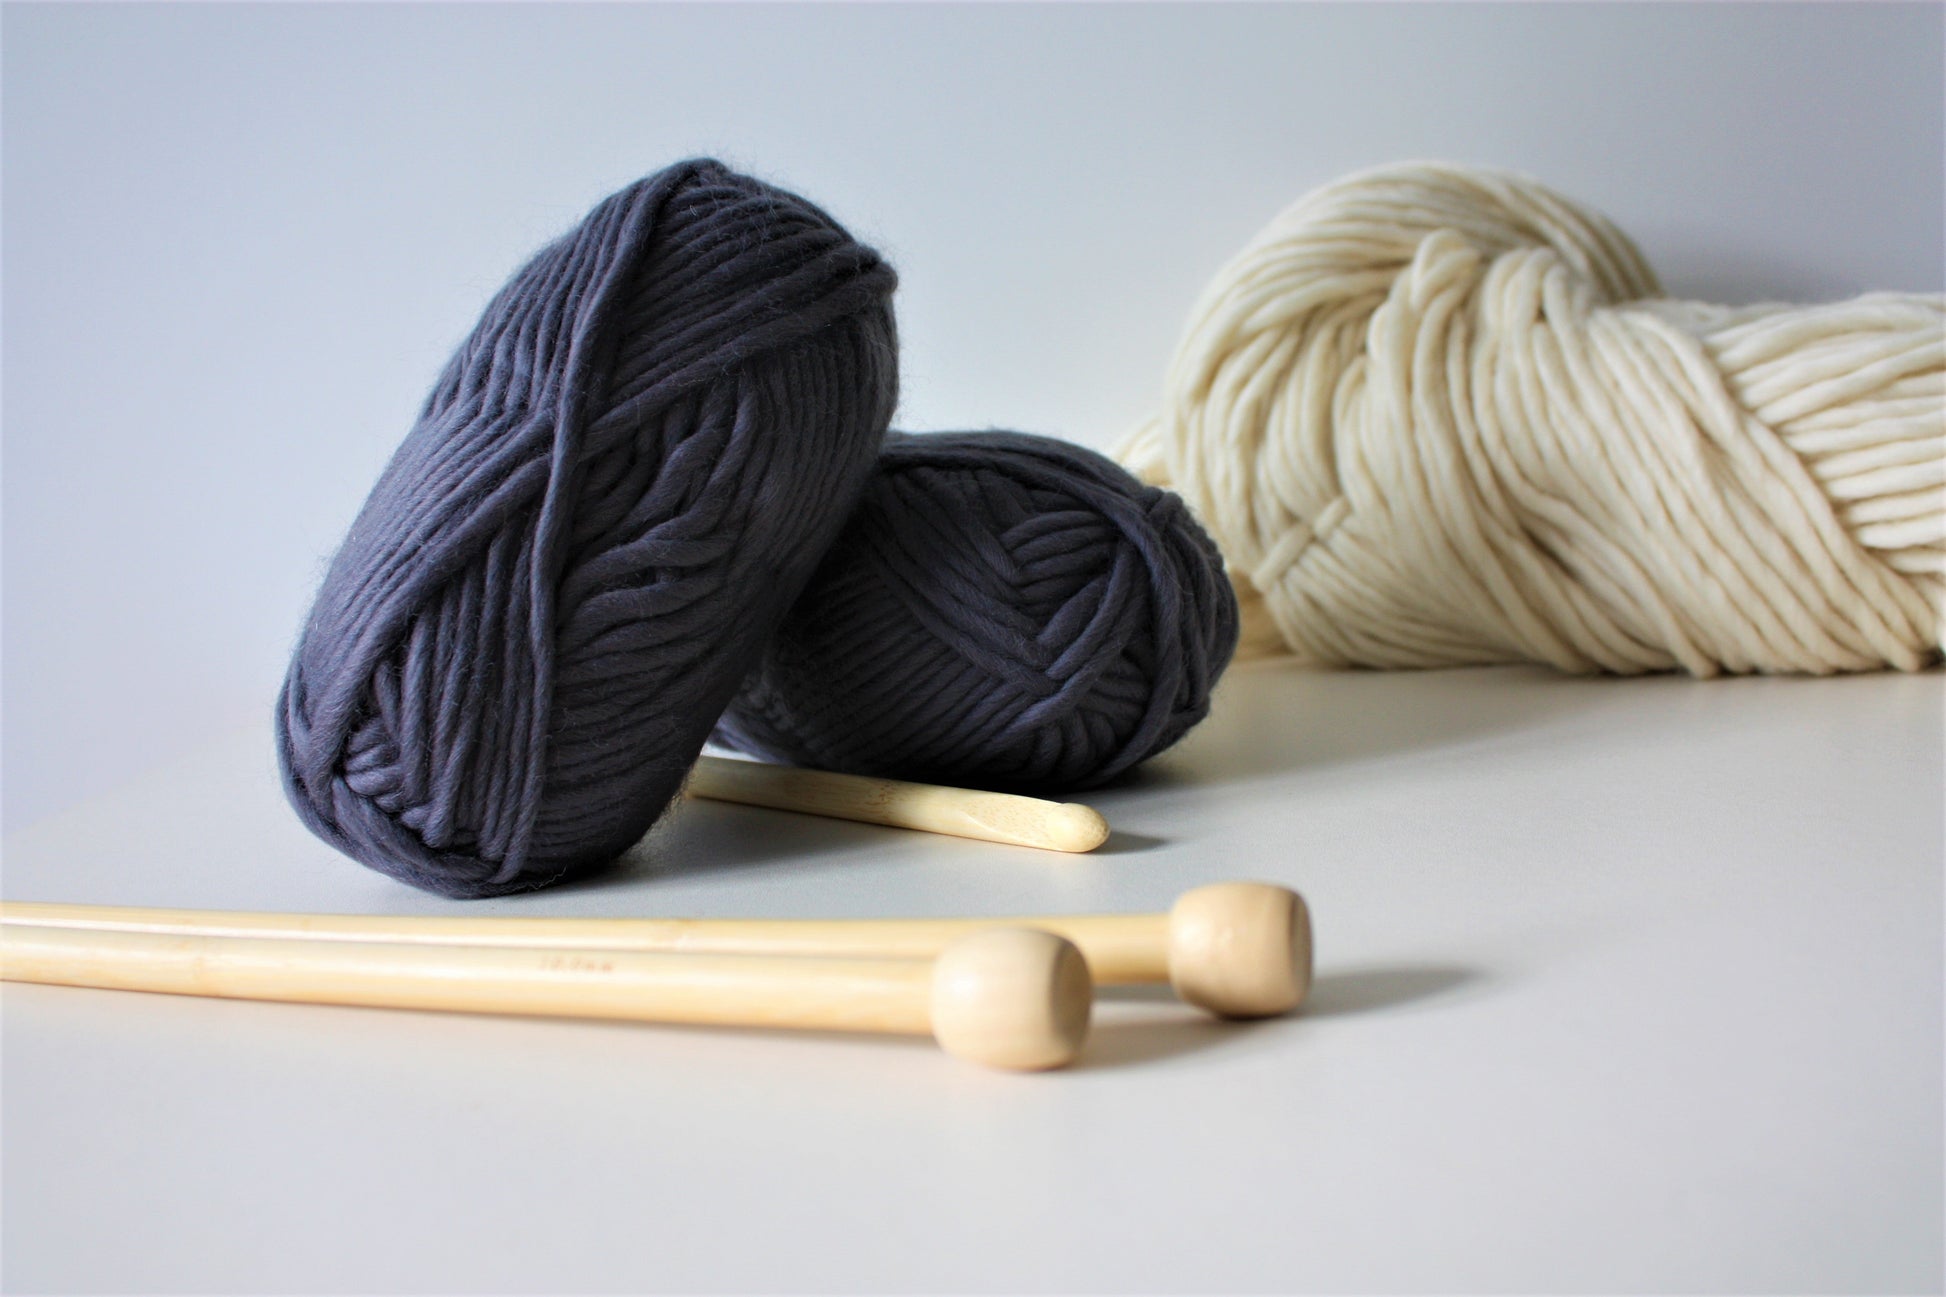 Makr Chunky Wool Crochet & Knitting Yarn, 100g